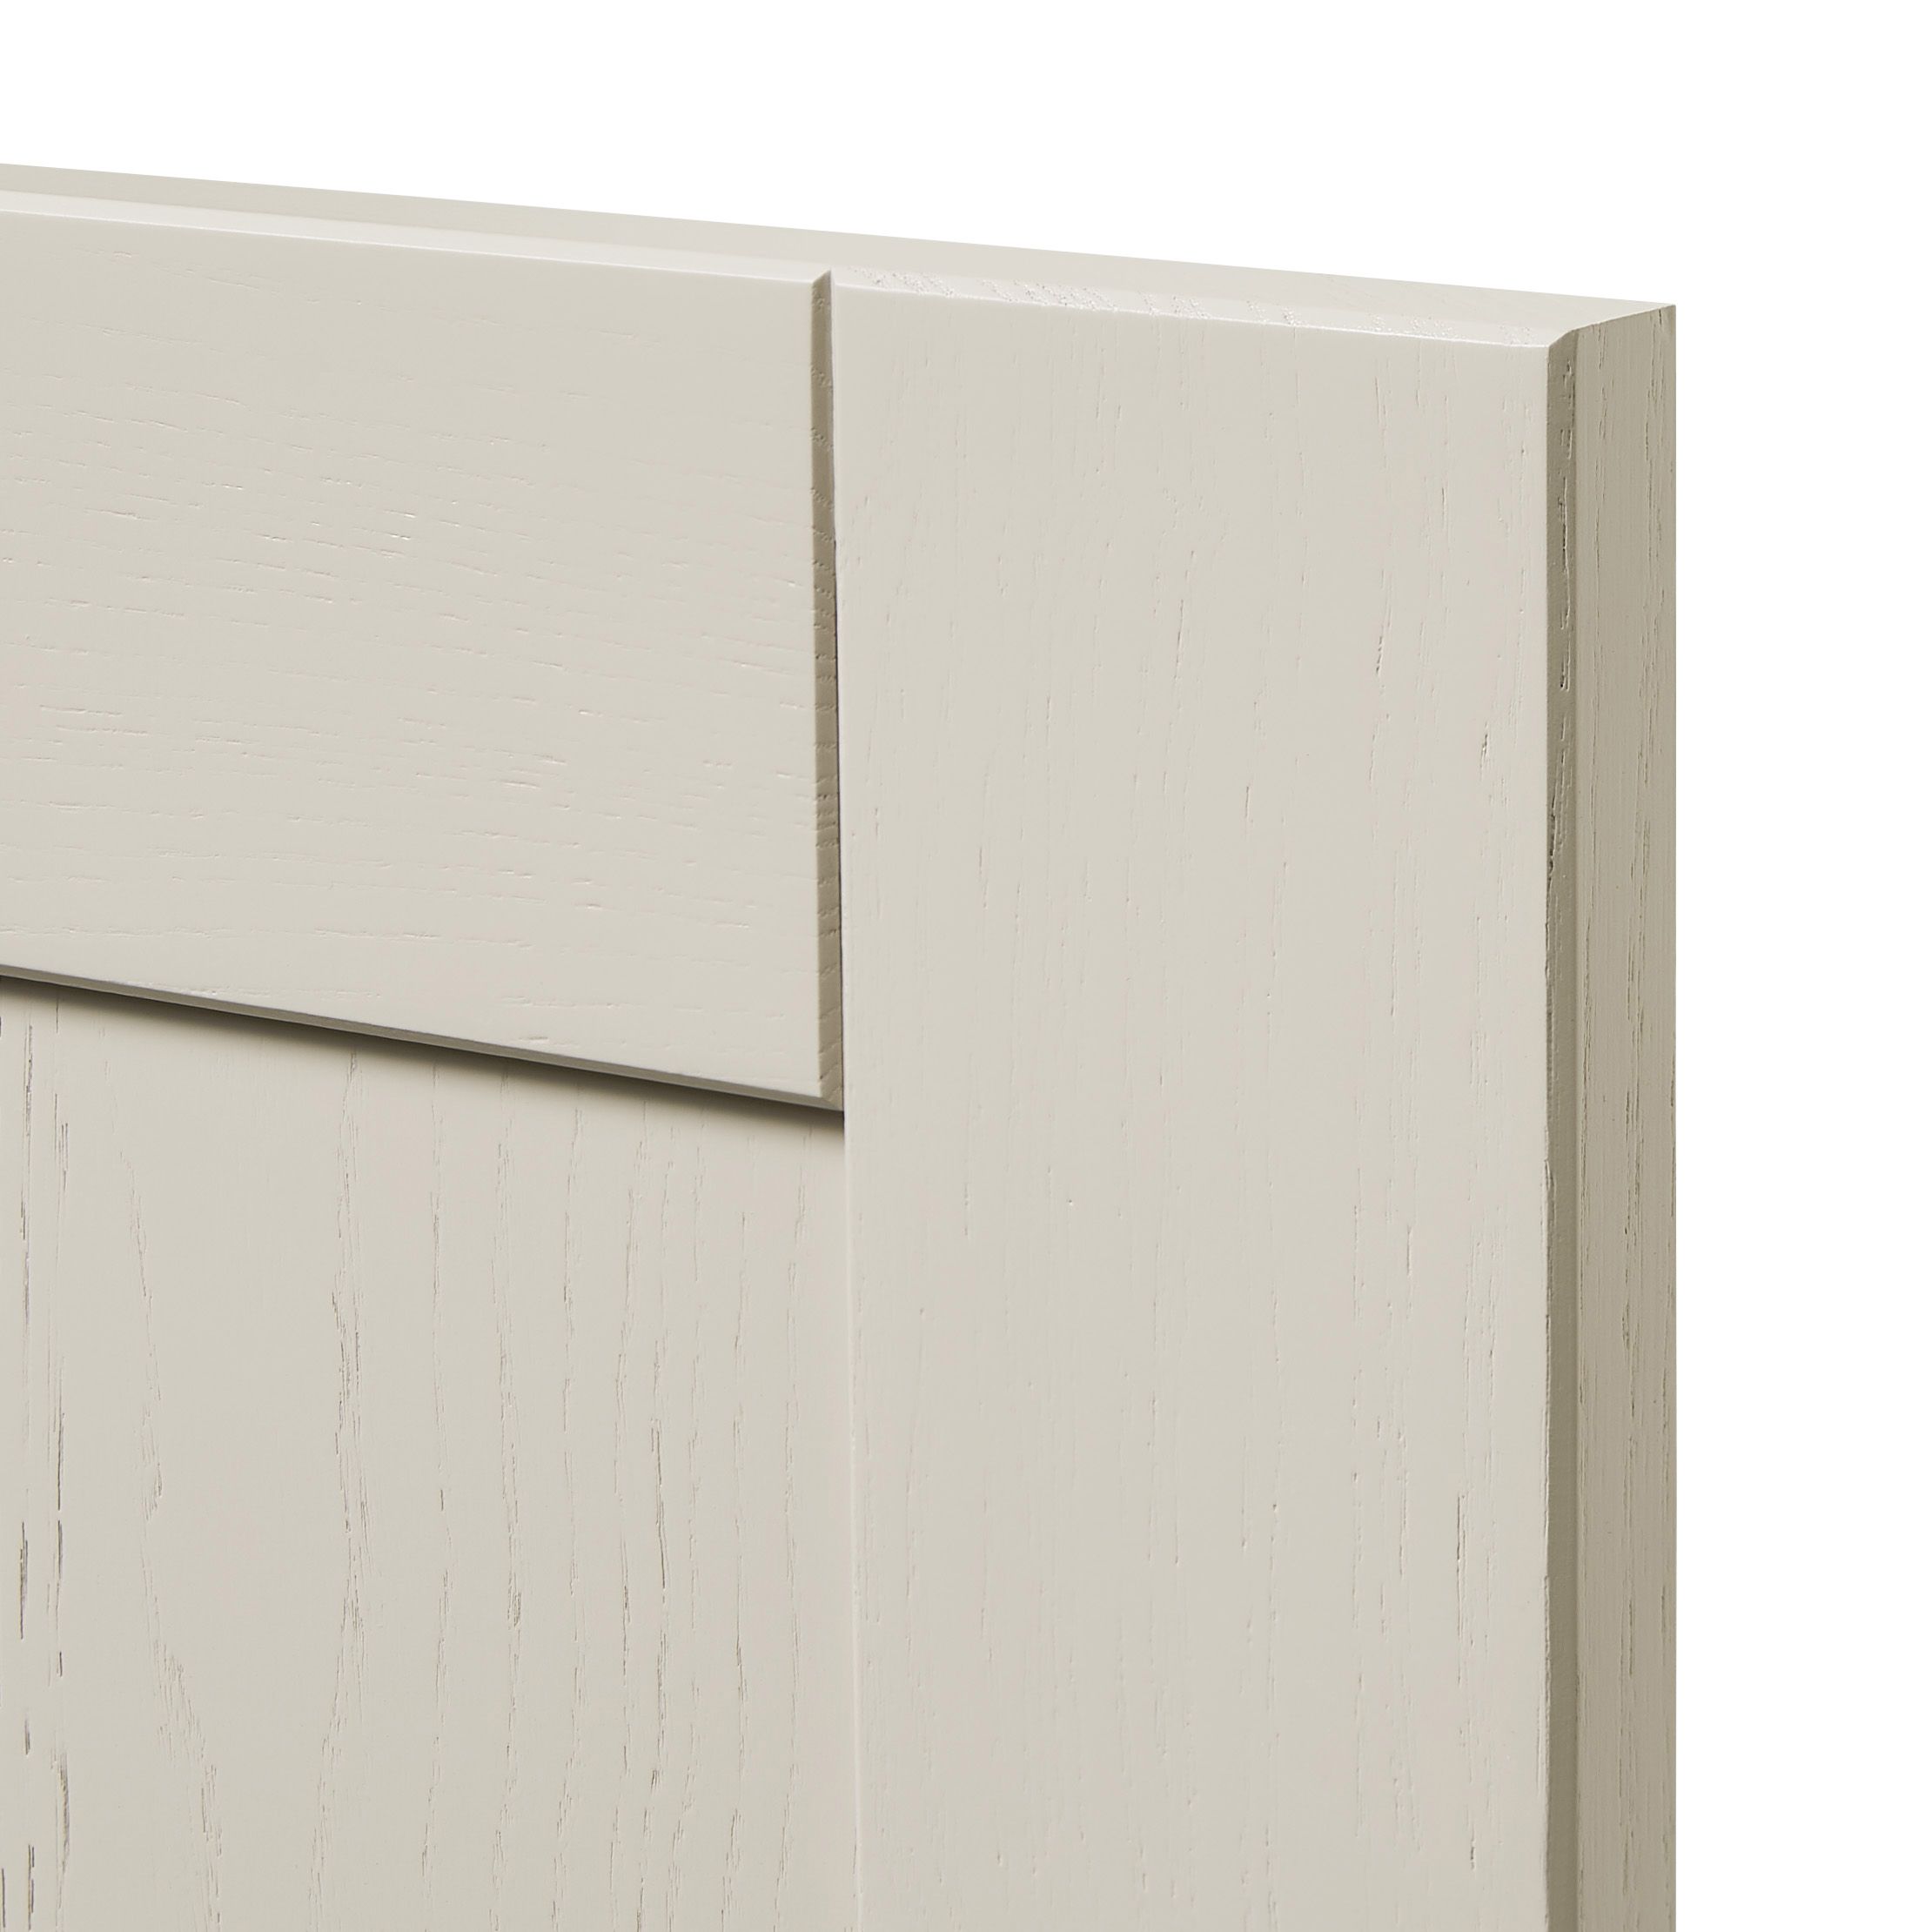 GoodHome Verbena Matt cashmere painted natural ash shaker Tall wall Cabinet door (W)500mm (H)895mm (T)20mm